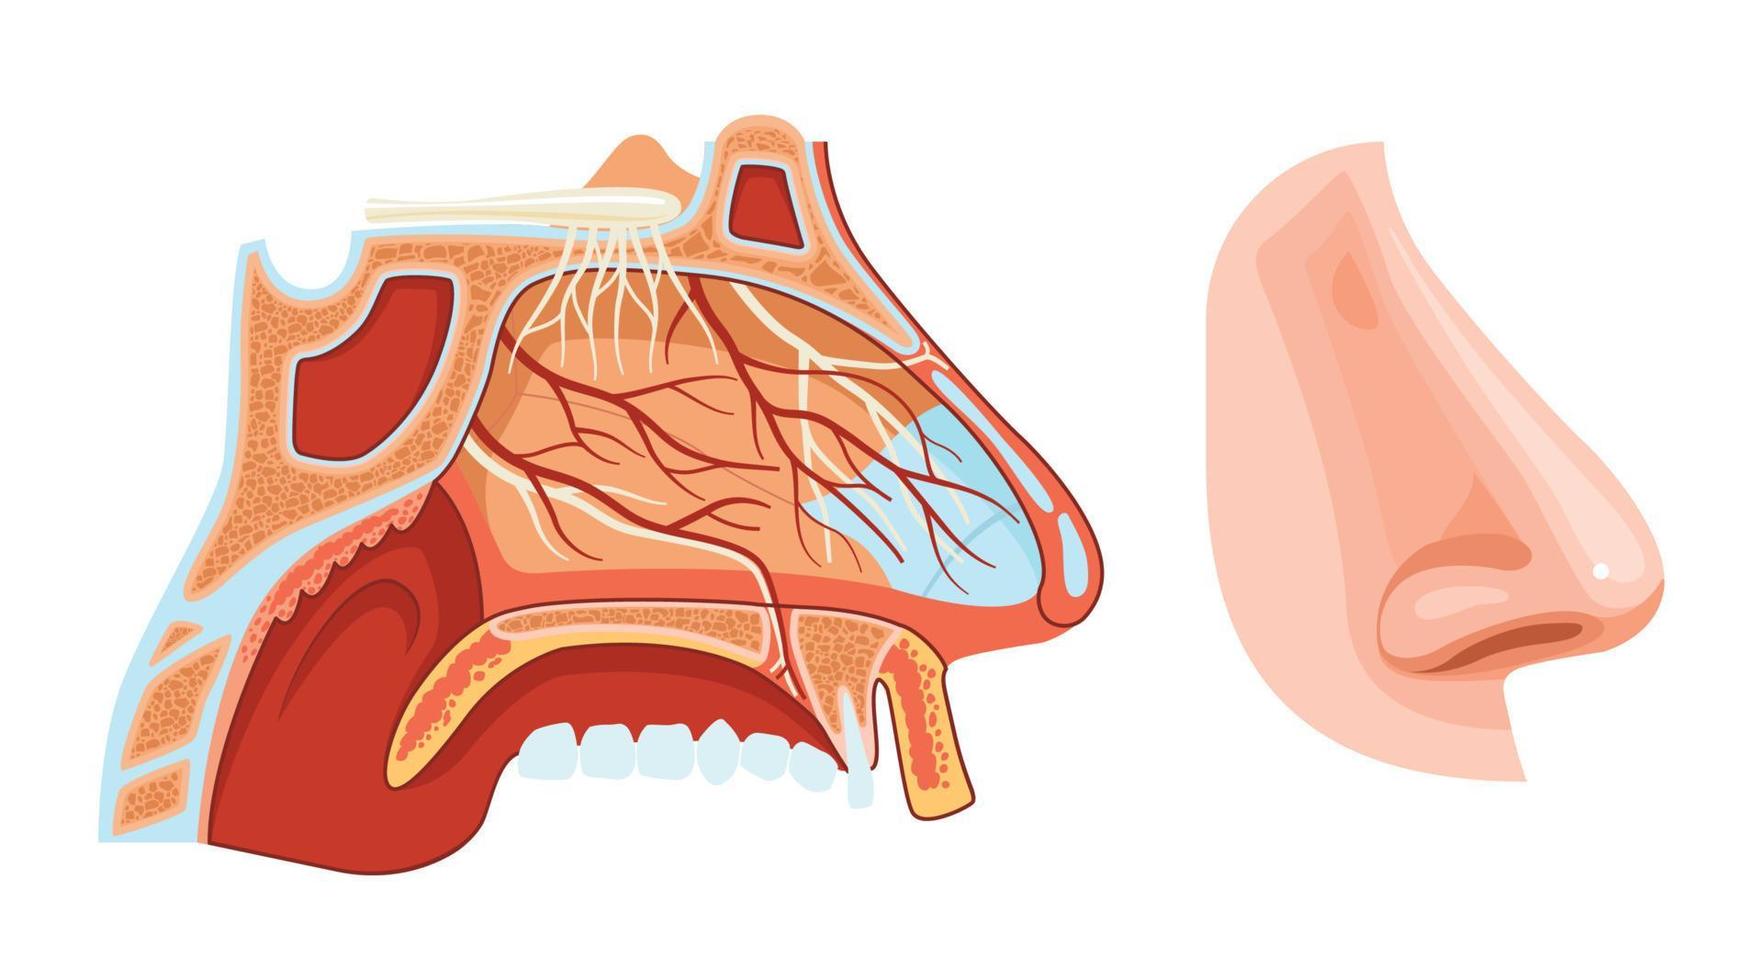 neus- anatomie realistisch illustratie vector